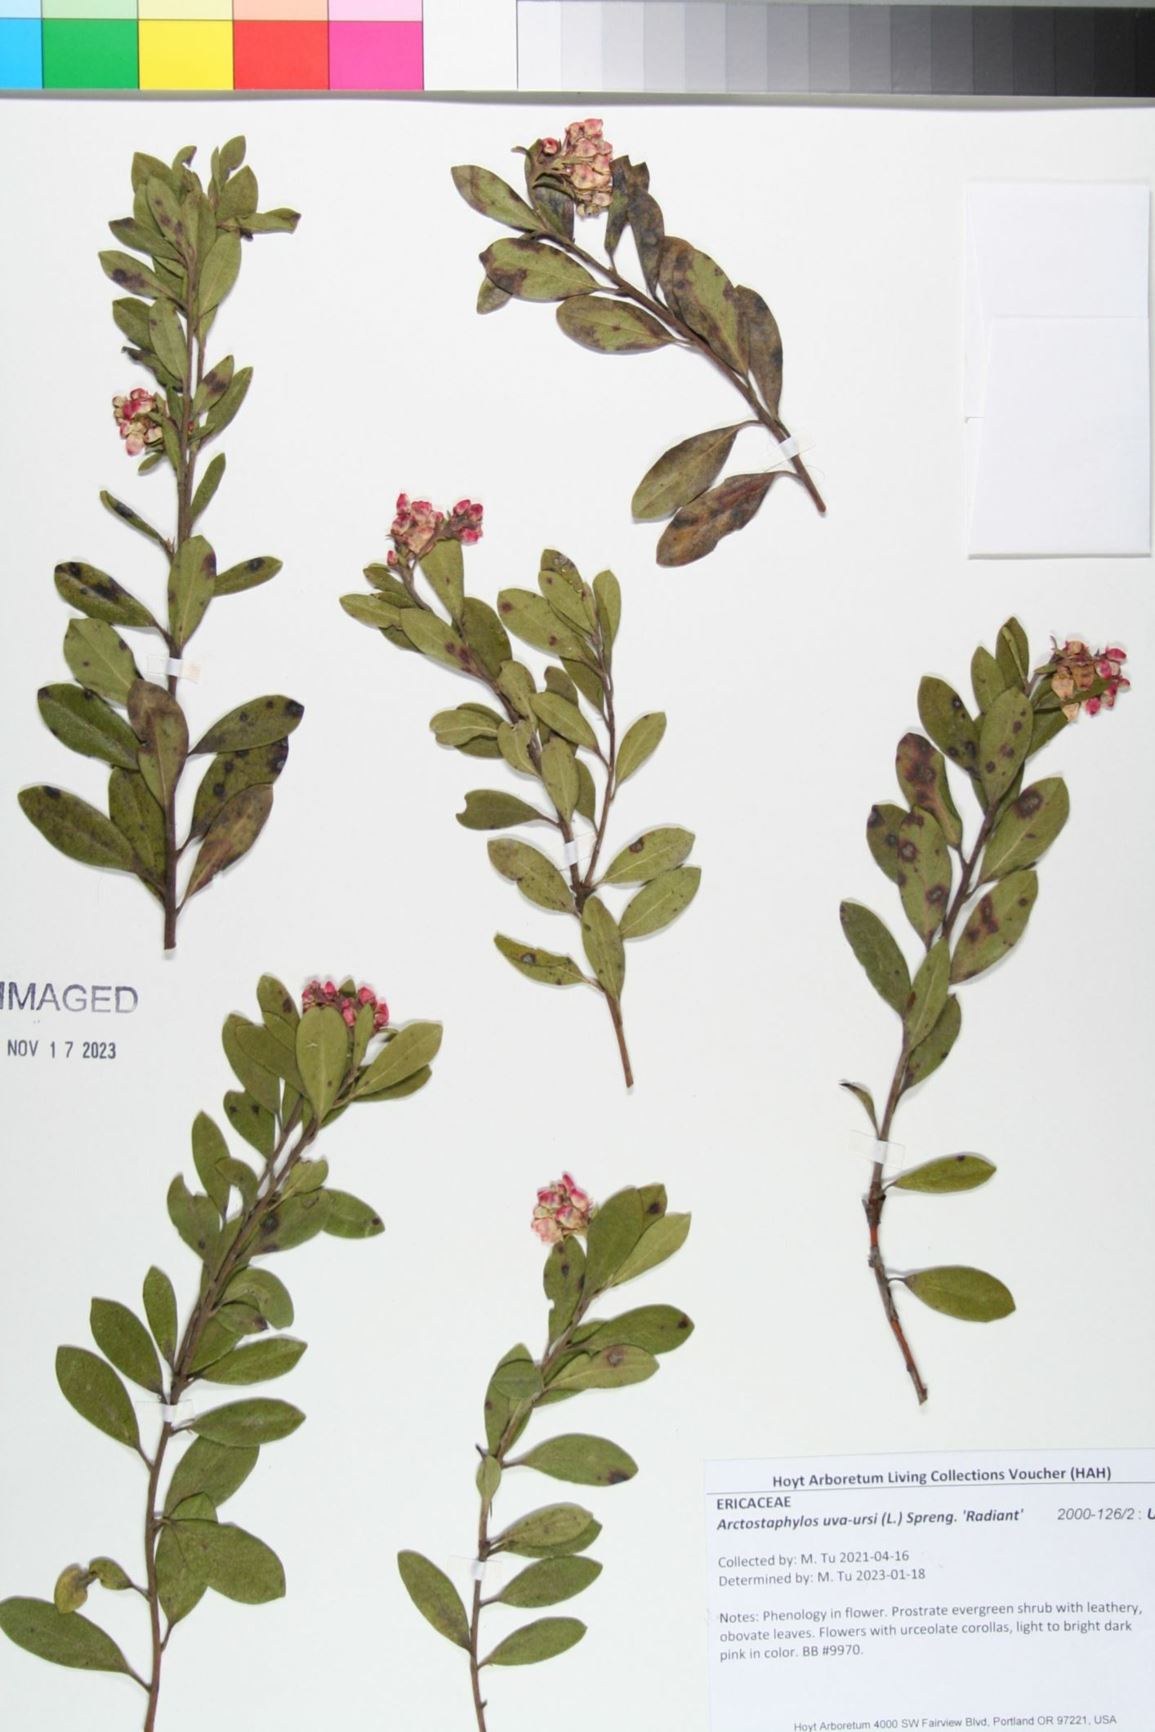 Arctostaphylos uva-ursi 'Radiant' - kinnikinnick, mealberry, bearberry, bearberry manzanita